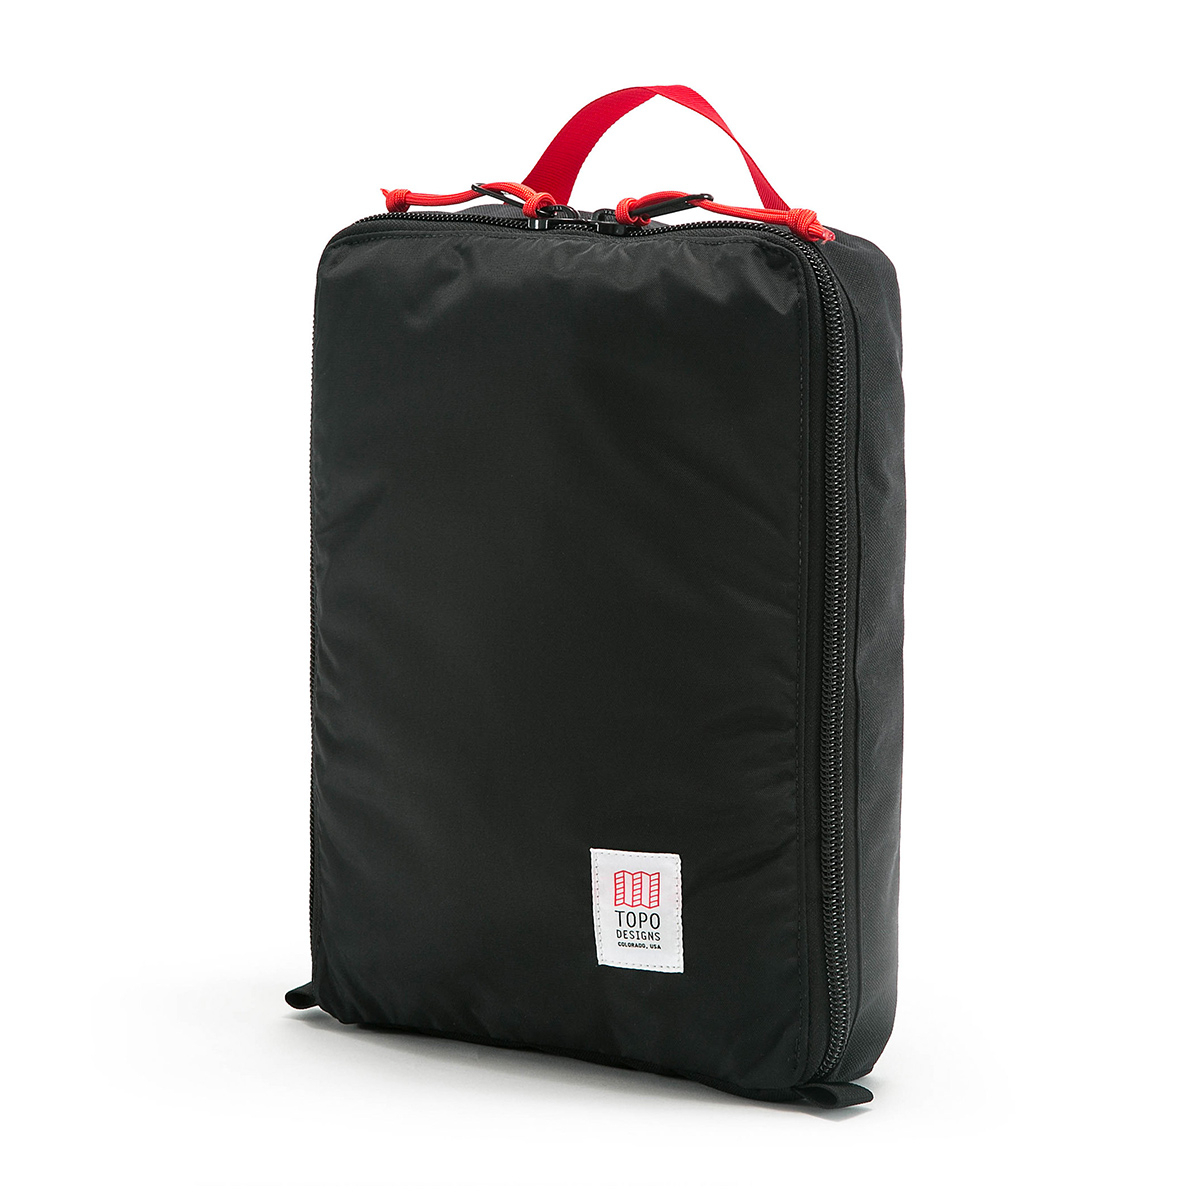 Topo Designs Pack Bag Navy, make traveling a little bit easier.